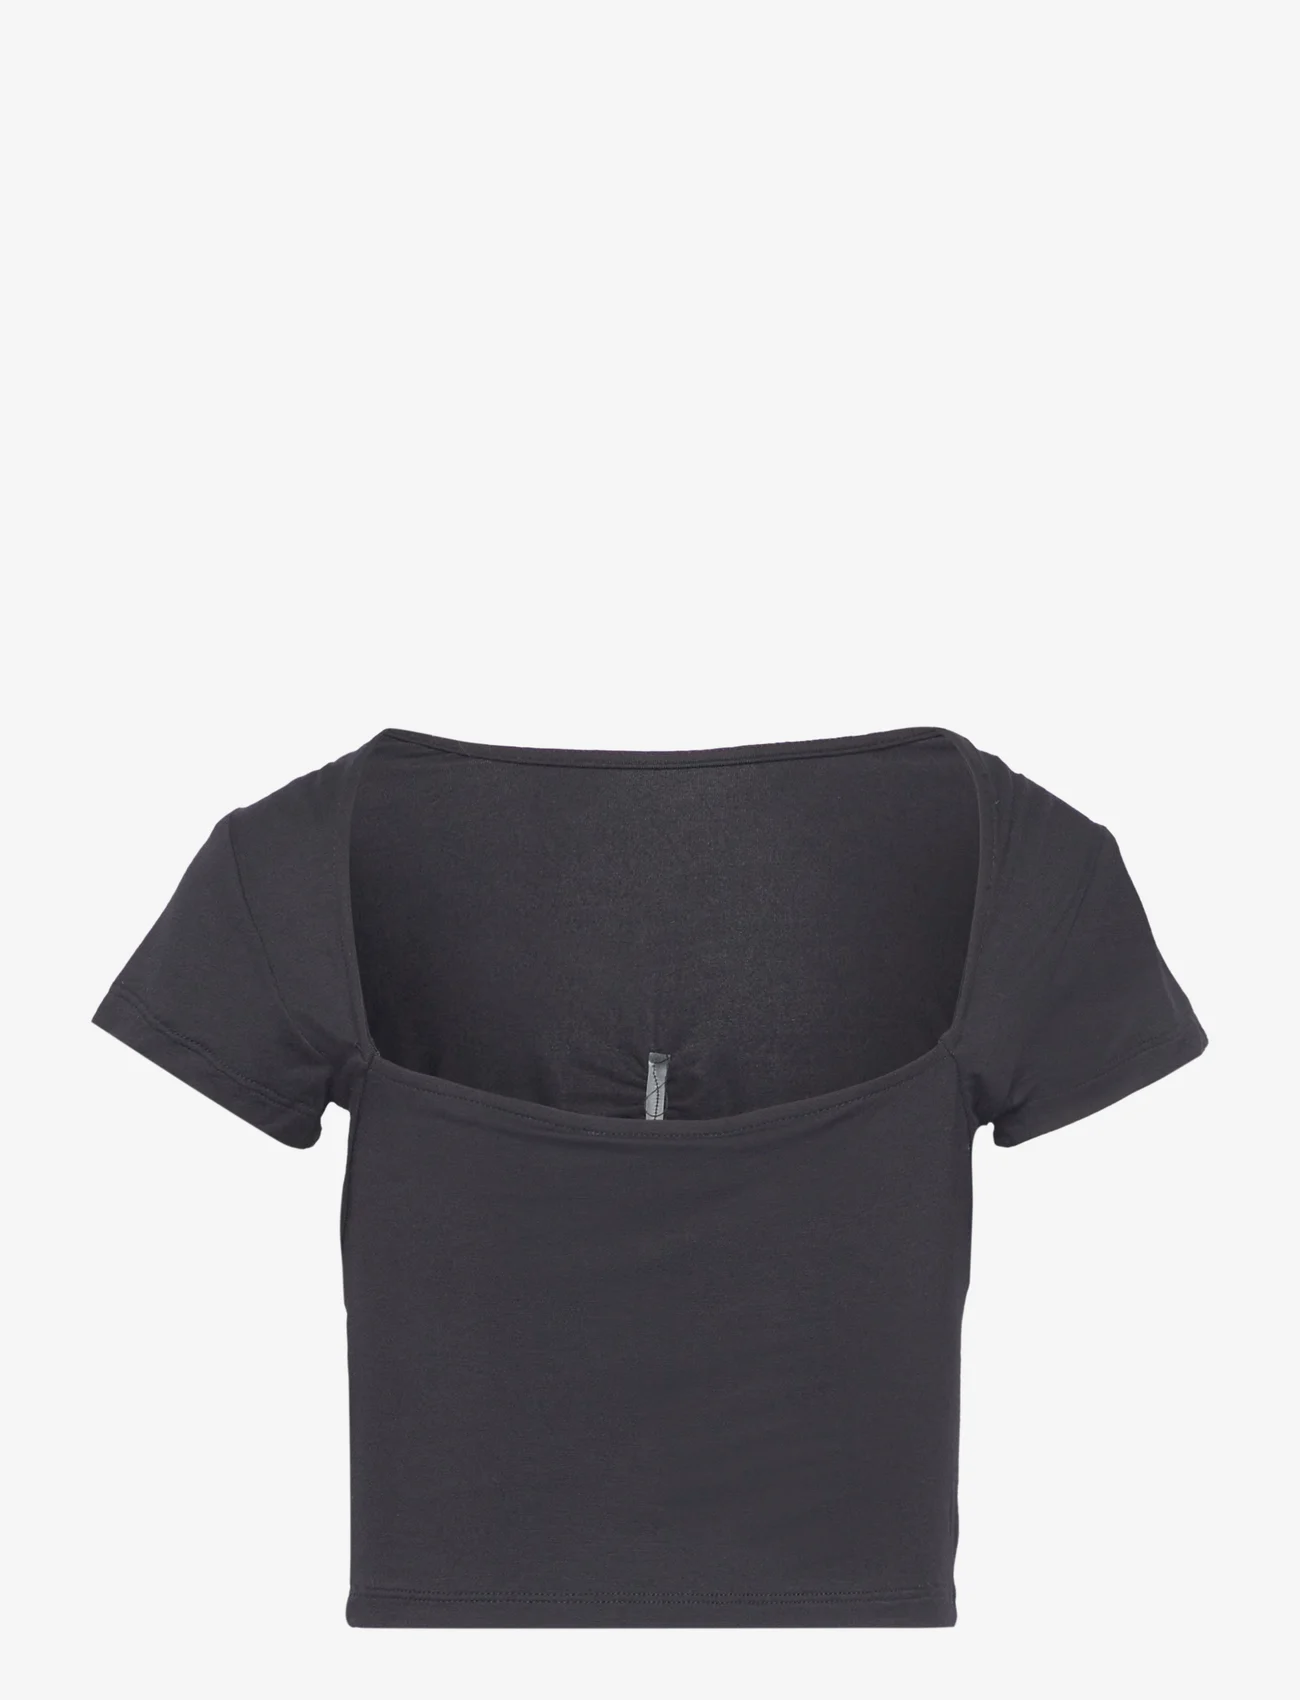 Rosemunde Kids - Viscose t-shirt - short-sleeved t-shirts - black - 1